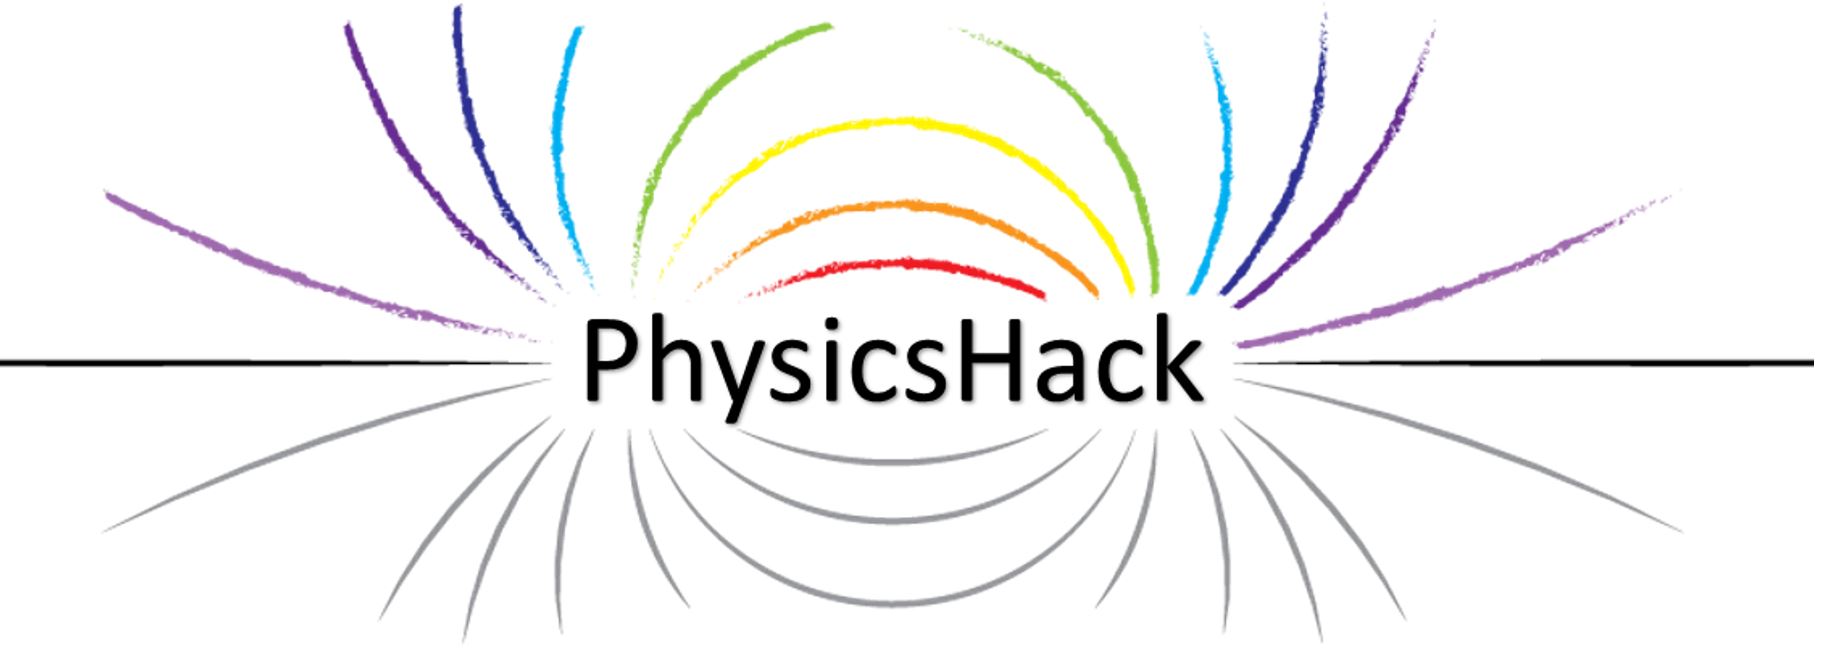 Physicshack